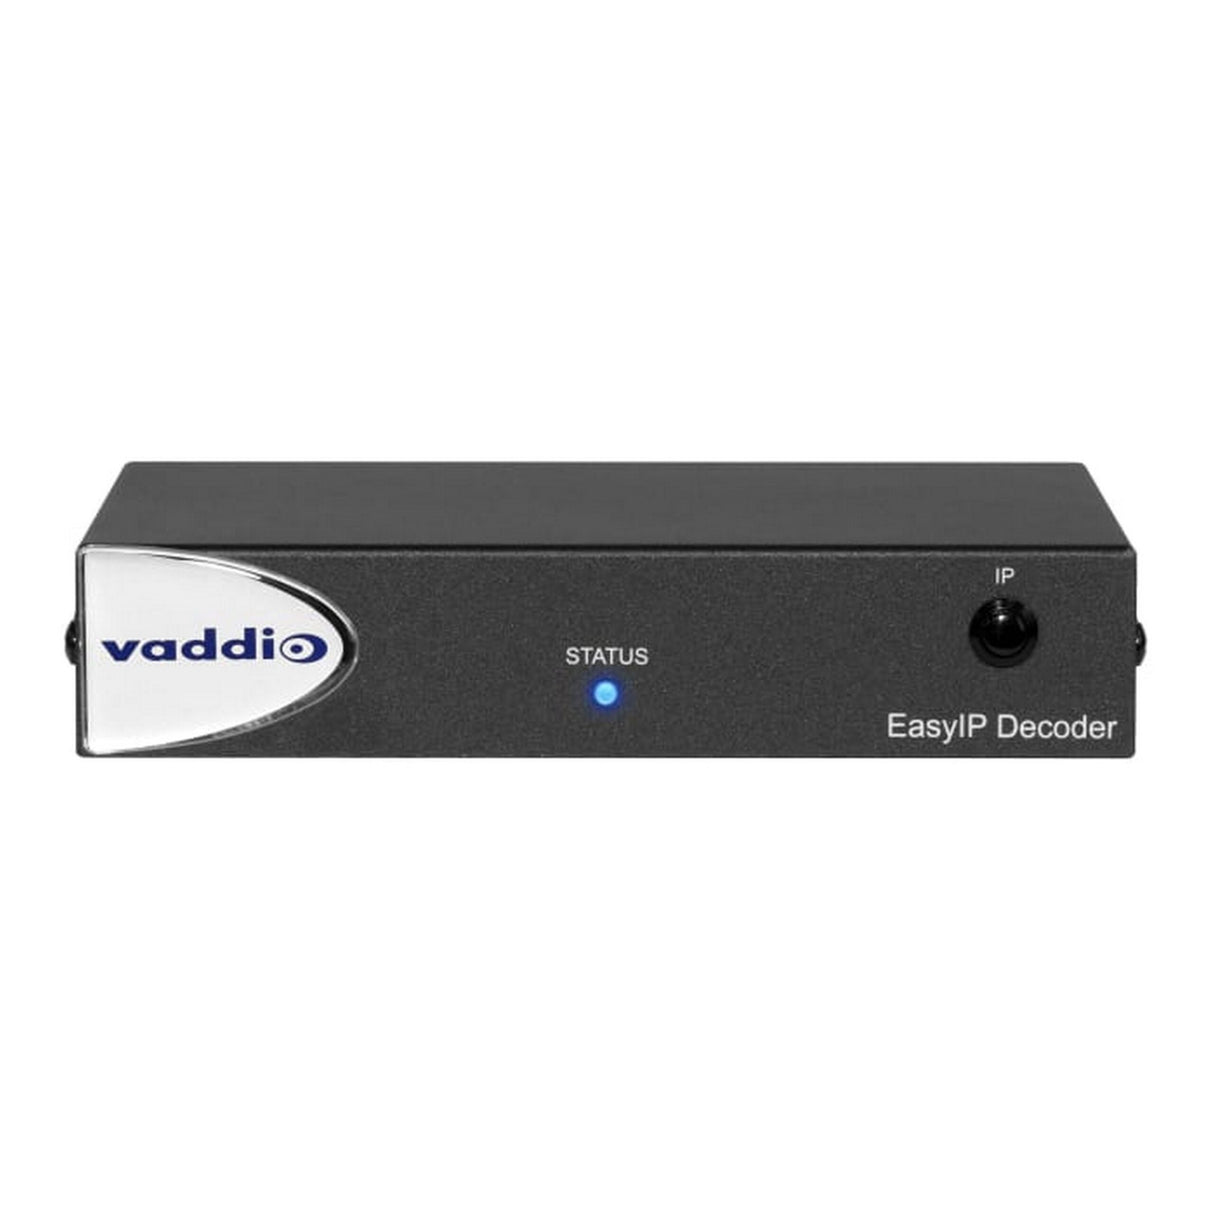 Vaddio EasyIP Decoder AV-Over-IP Bridging Solution for Videoconferencing